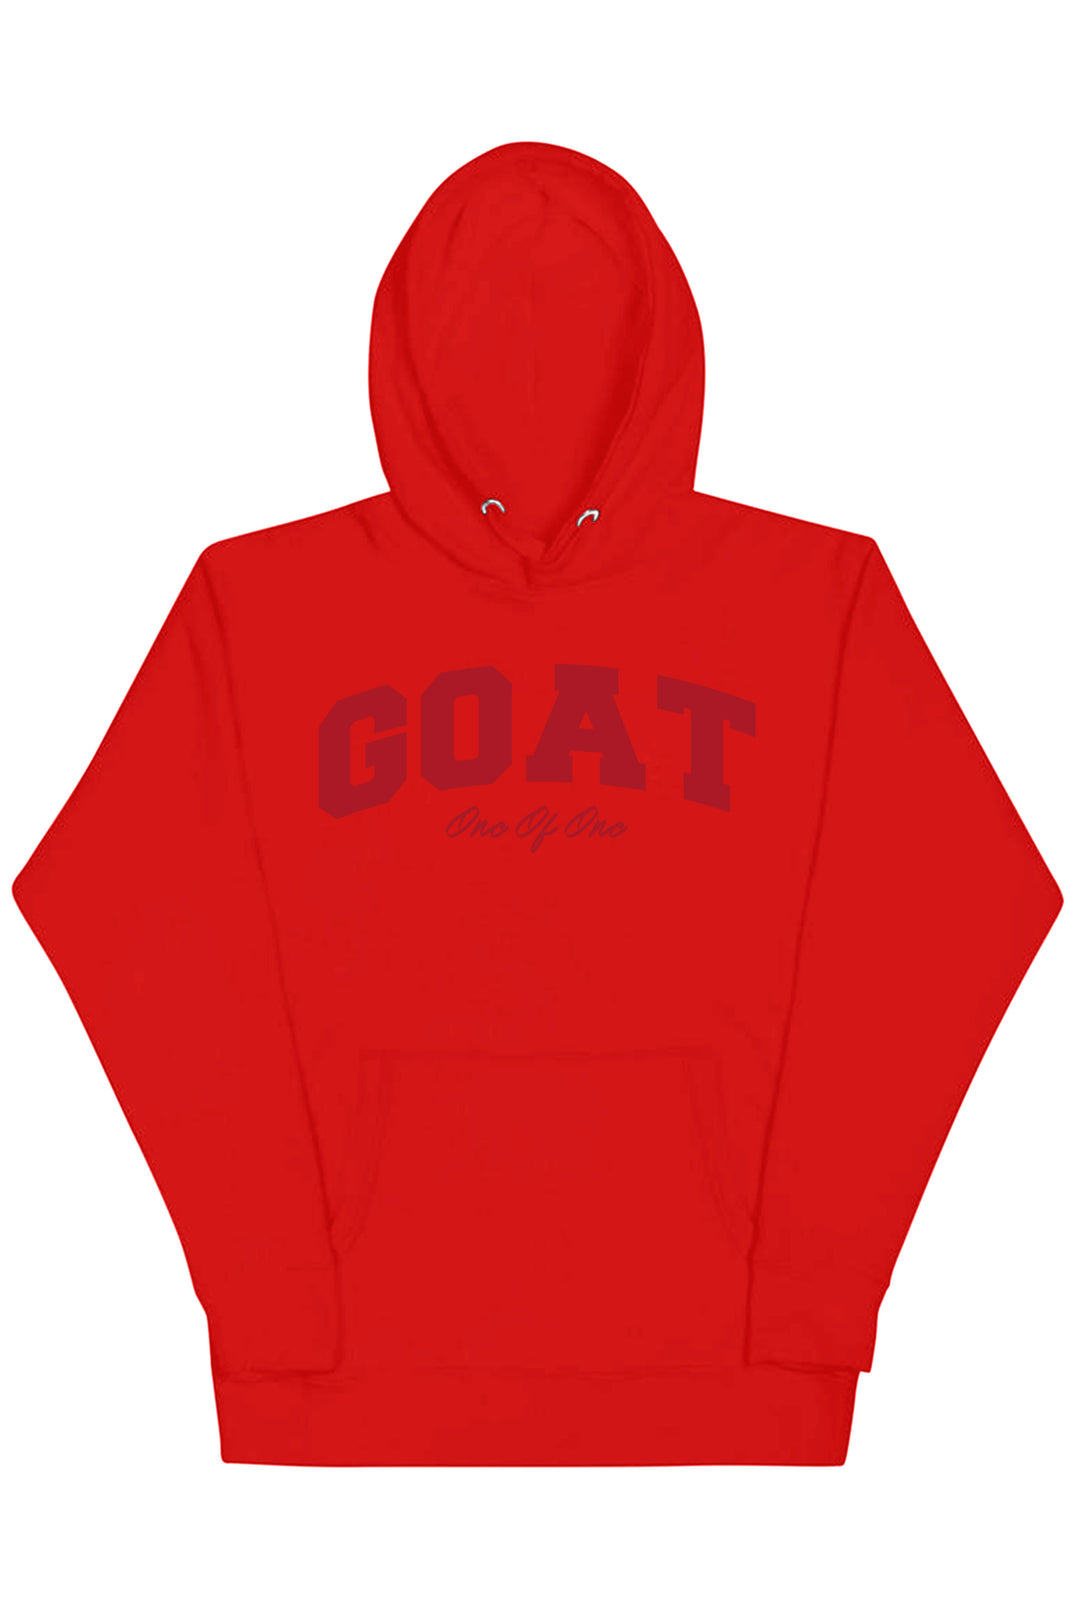 Goat Hoodie (Red Logo) - Zamage